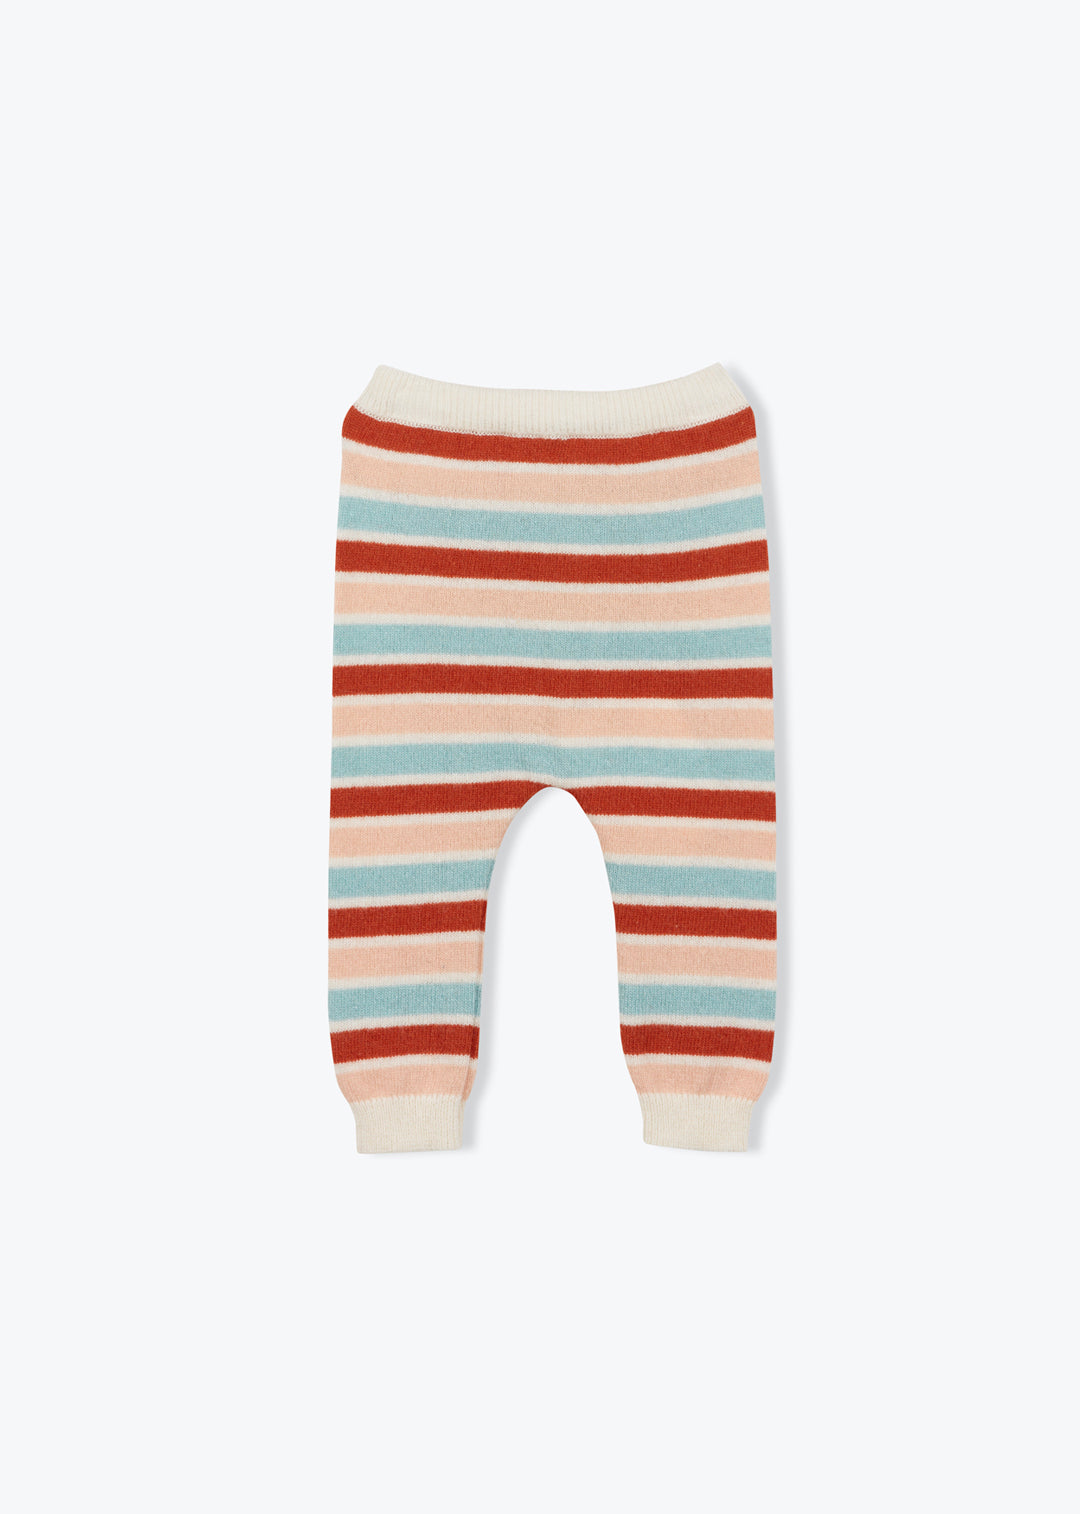 Tricolor Striped Baby Leggings